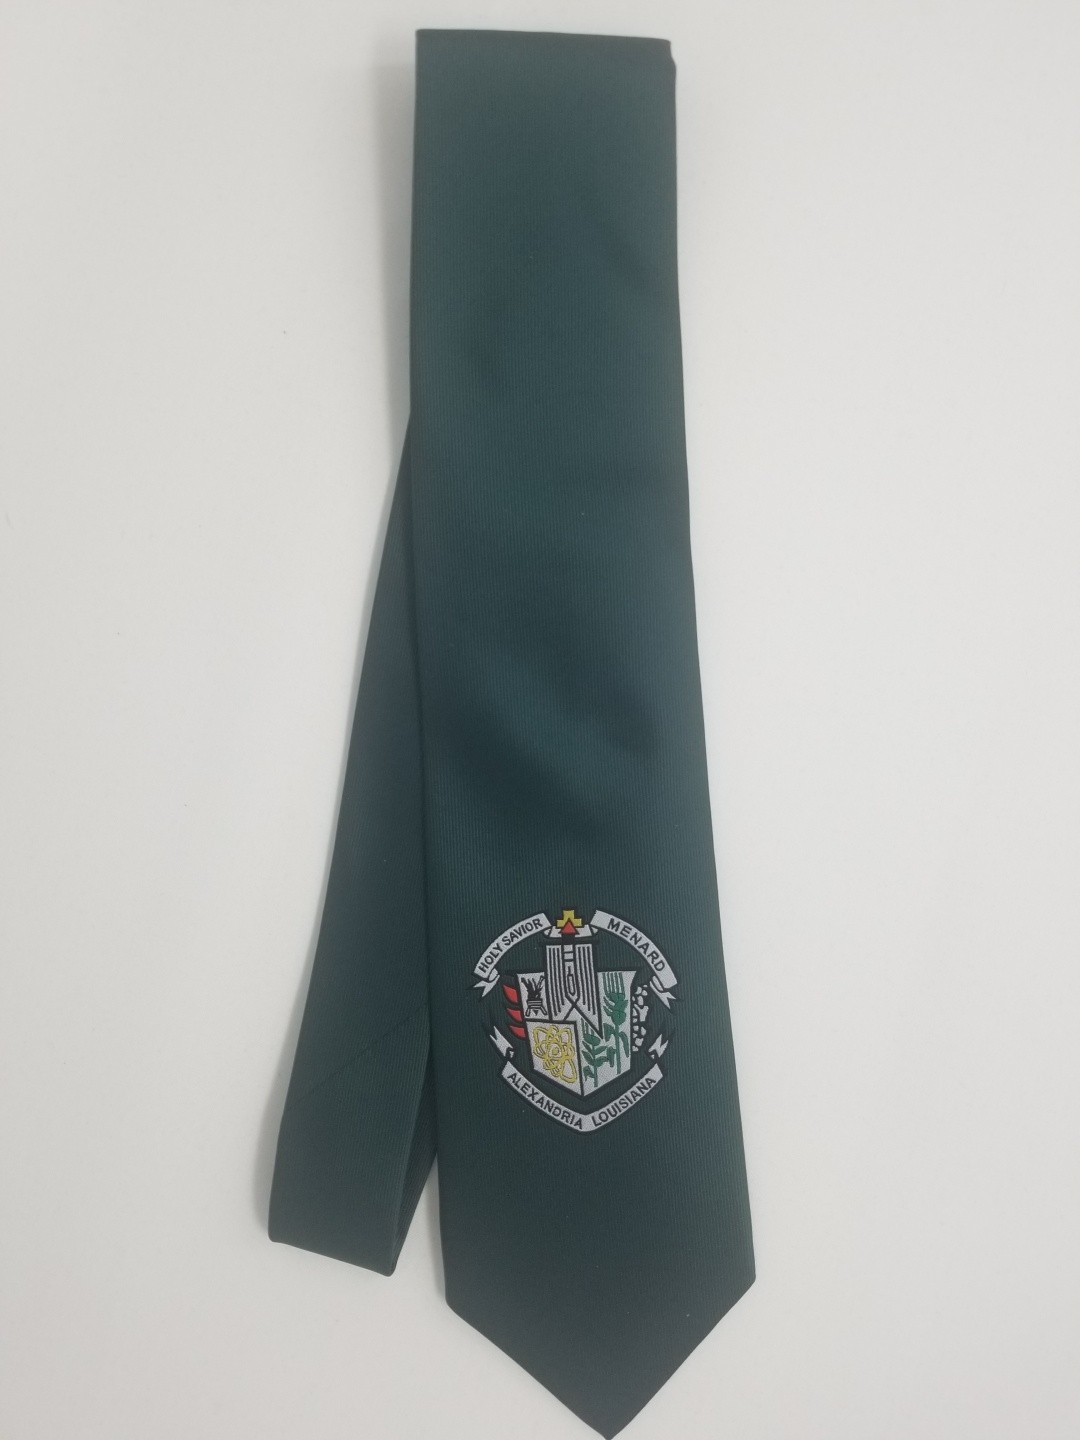 Boys 4-in-hand Necktie-Green Tie w/ Menard Logo